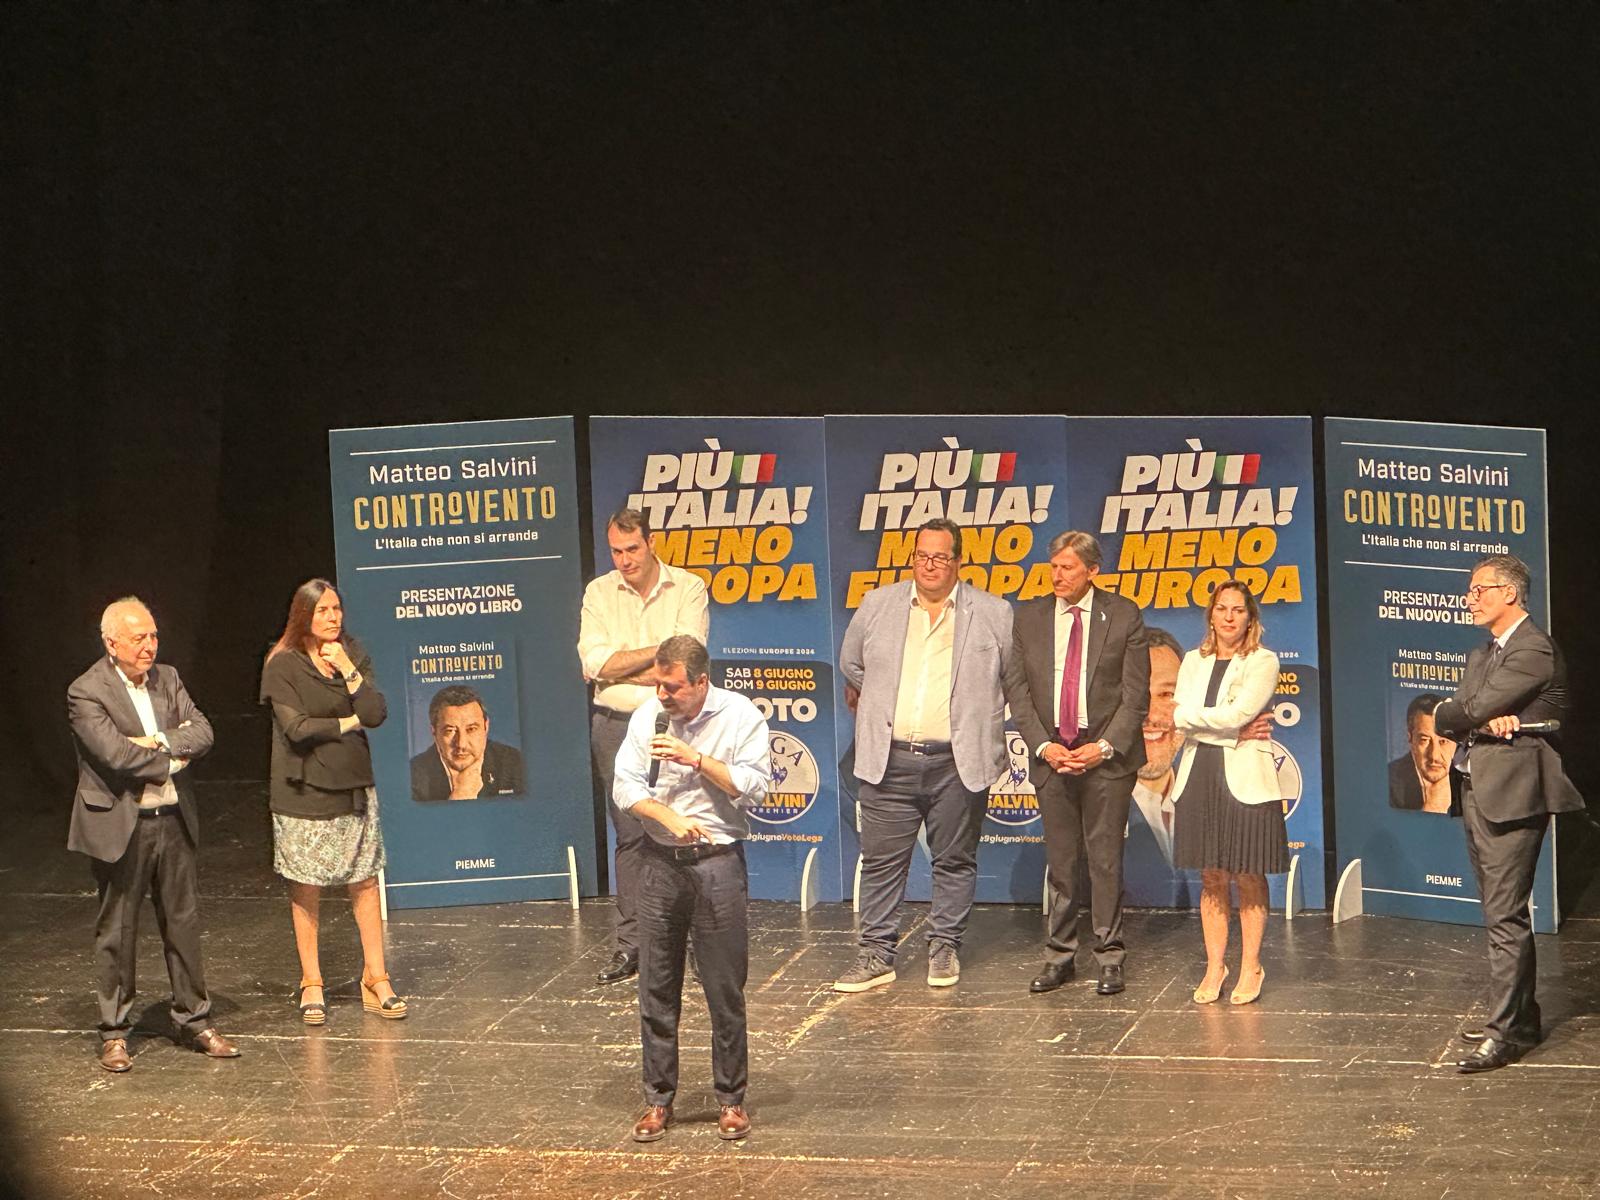 Matteo Salvini a Catania: “Luca Sammartino deve essere assessore”